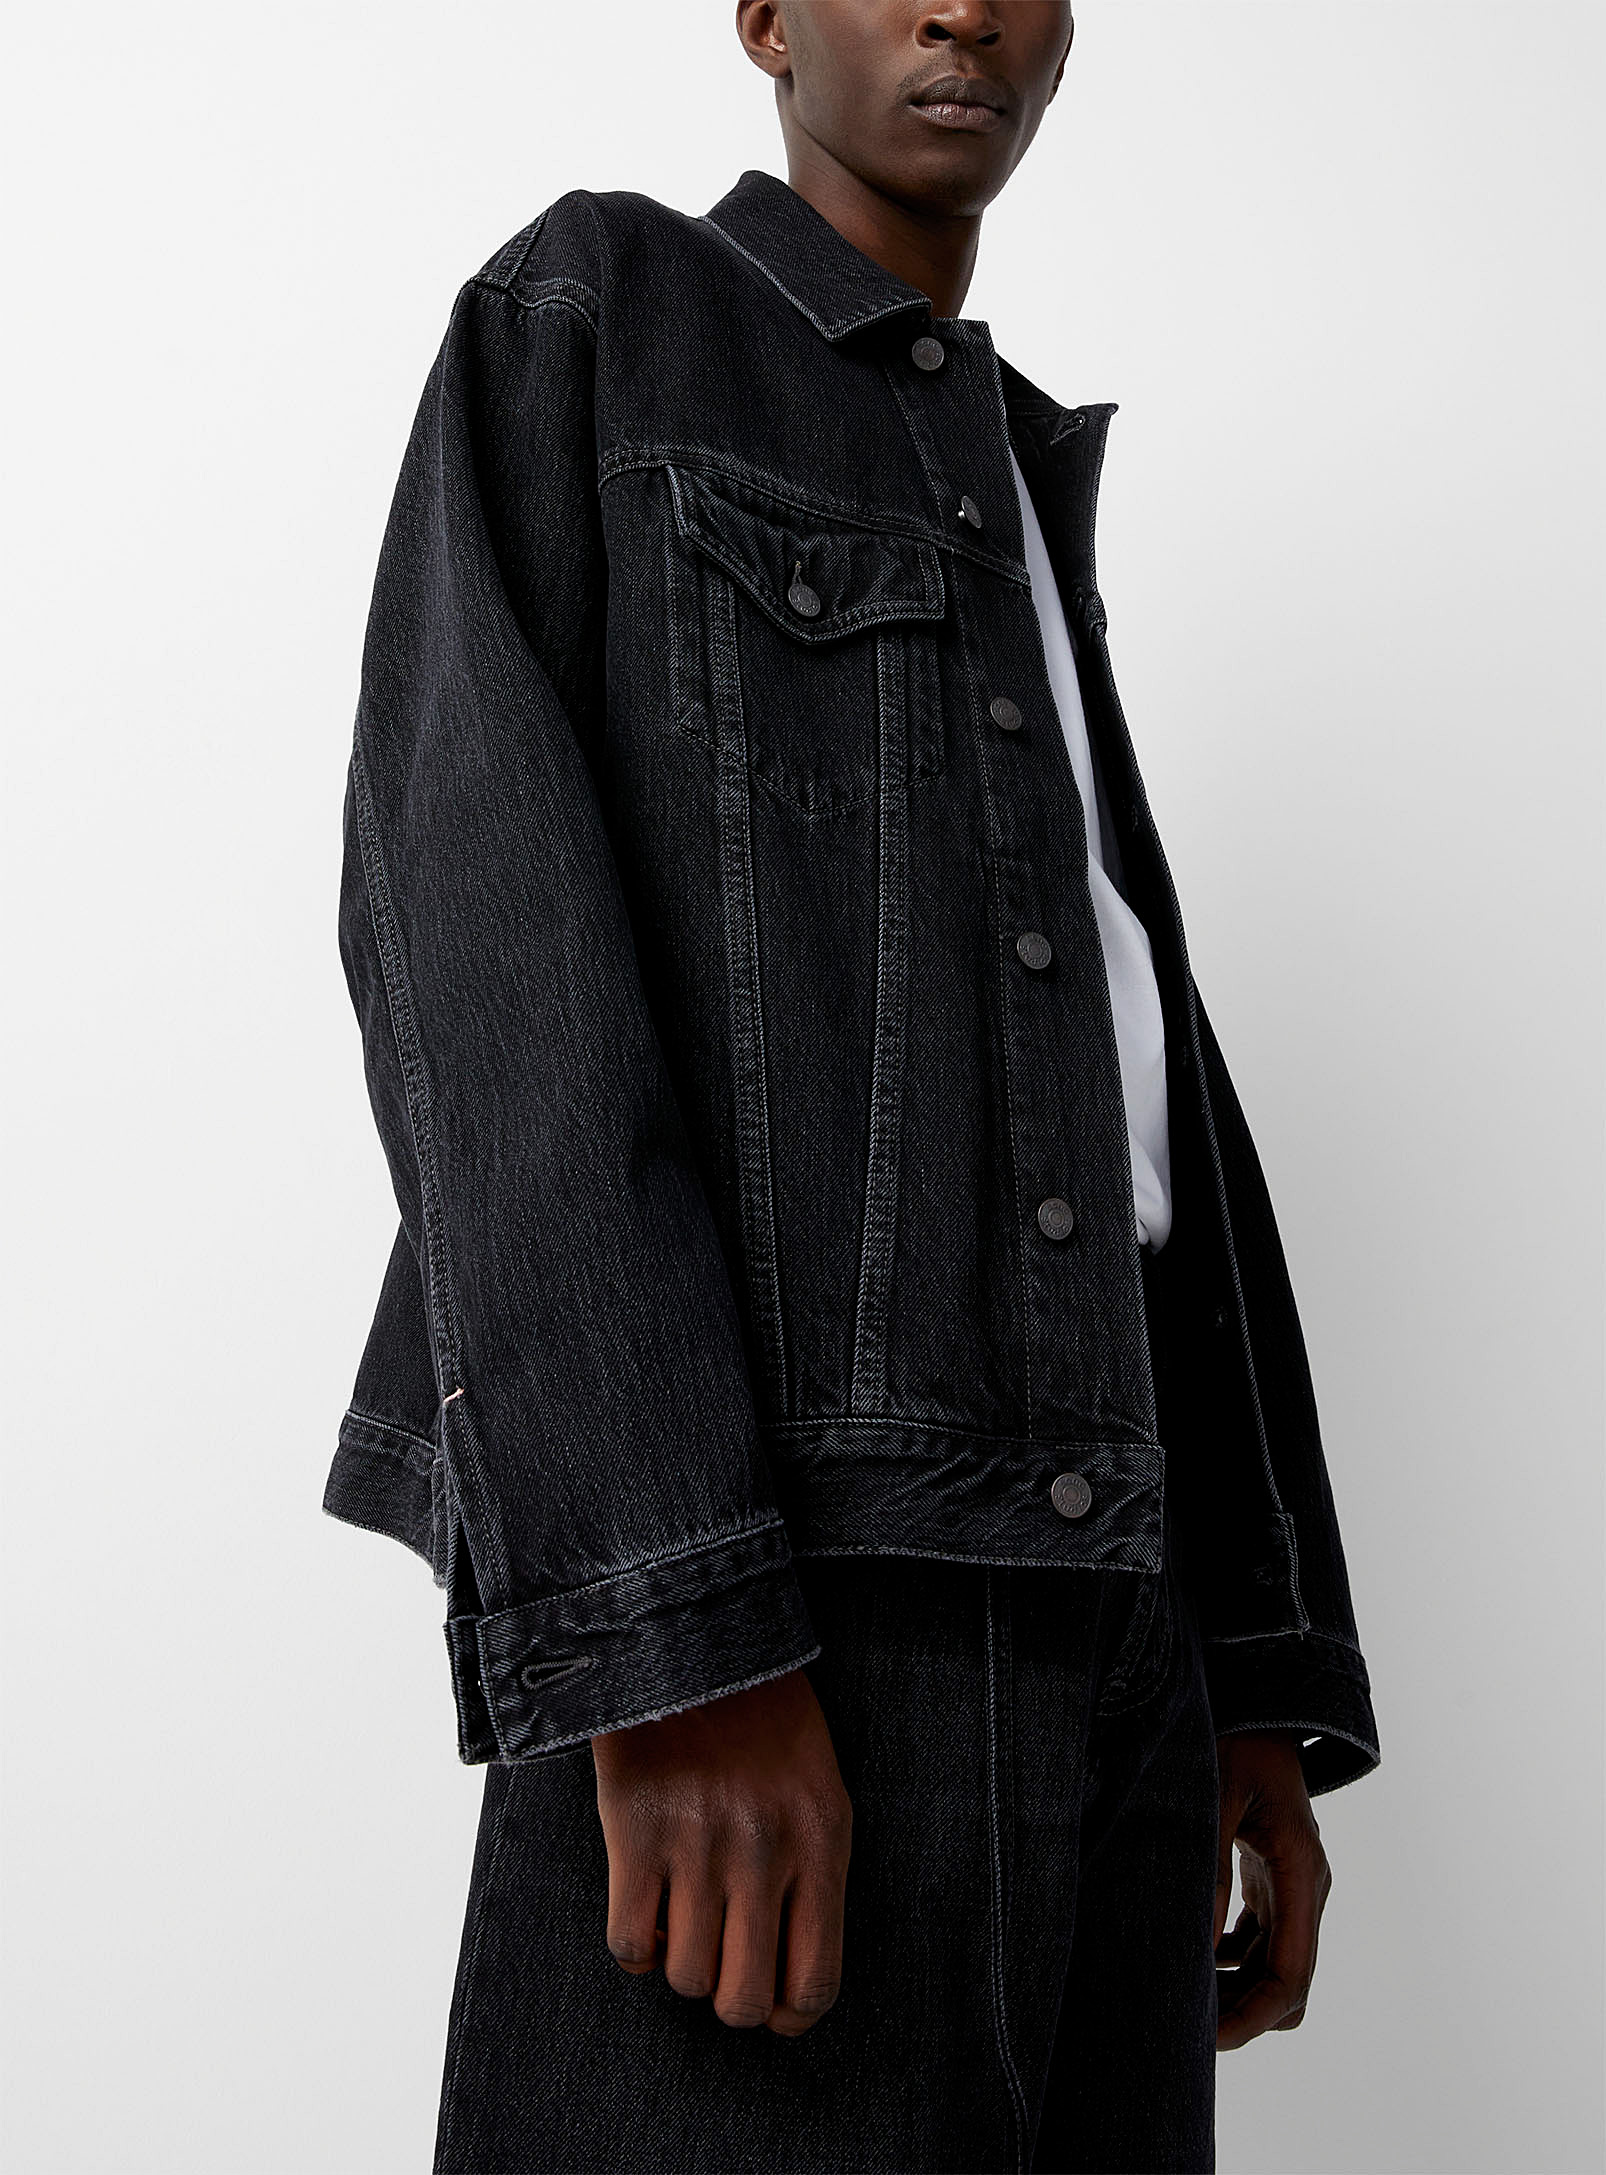 Acne Studios - Men's Faded black jean jacket